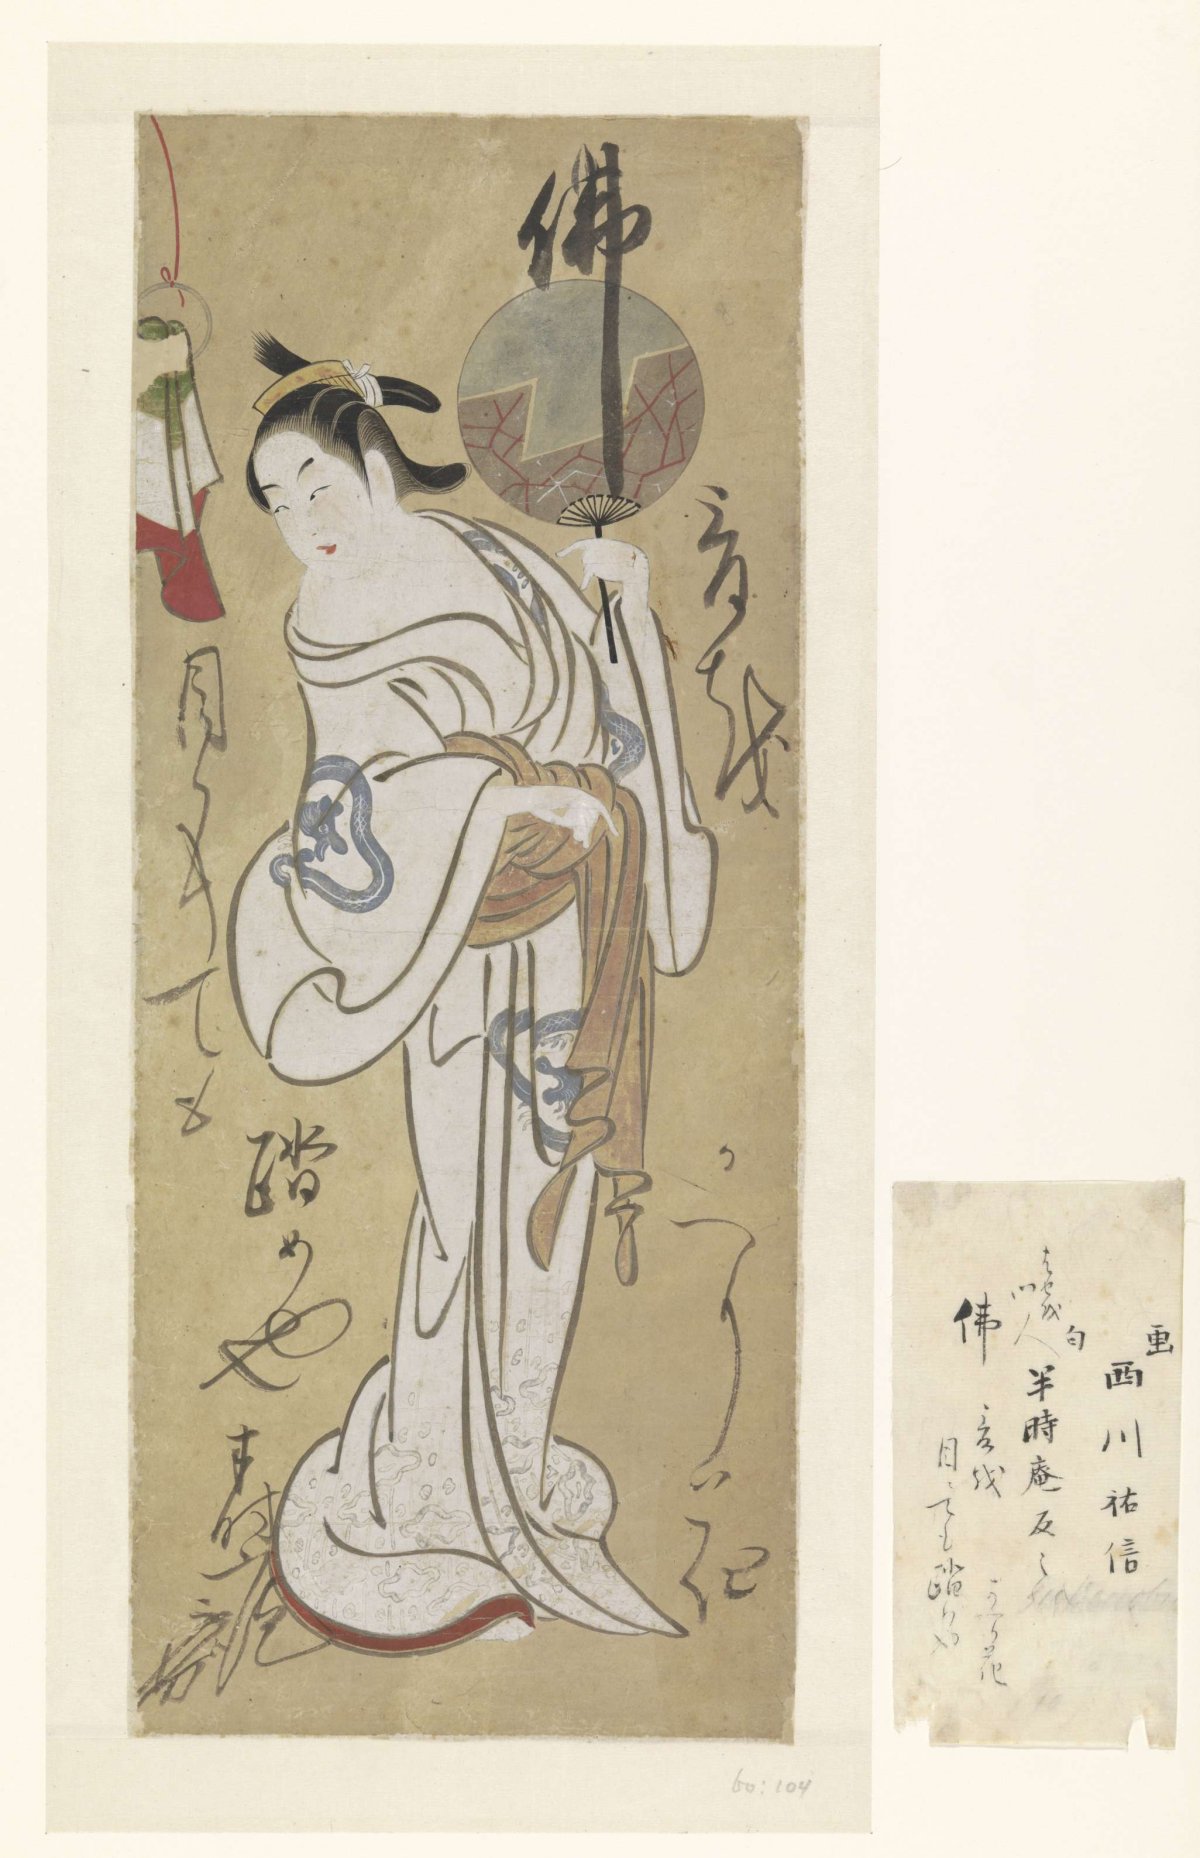 Standing woman in kimono, Nishikawa Sukenobu, 1688 - 1751